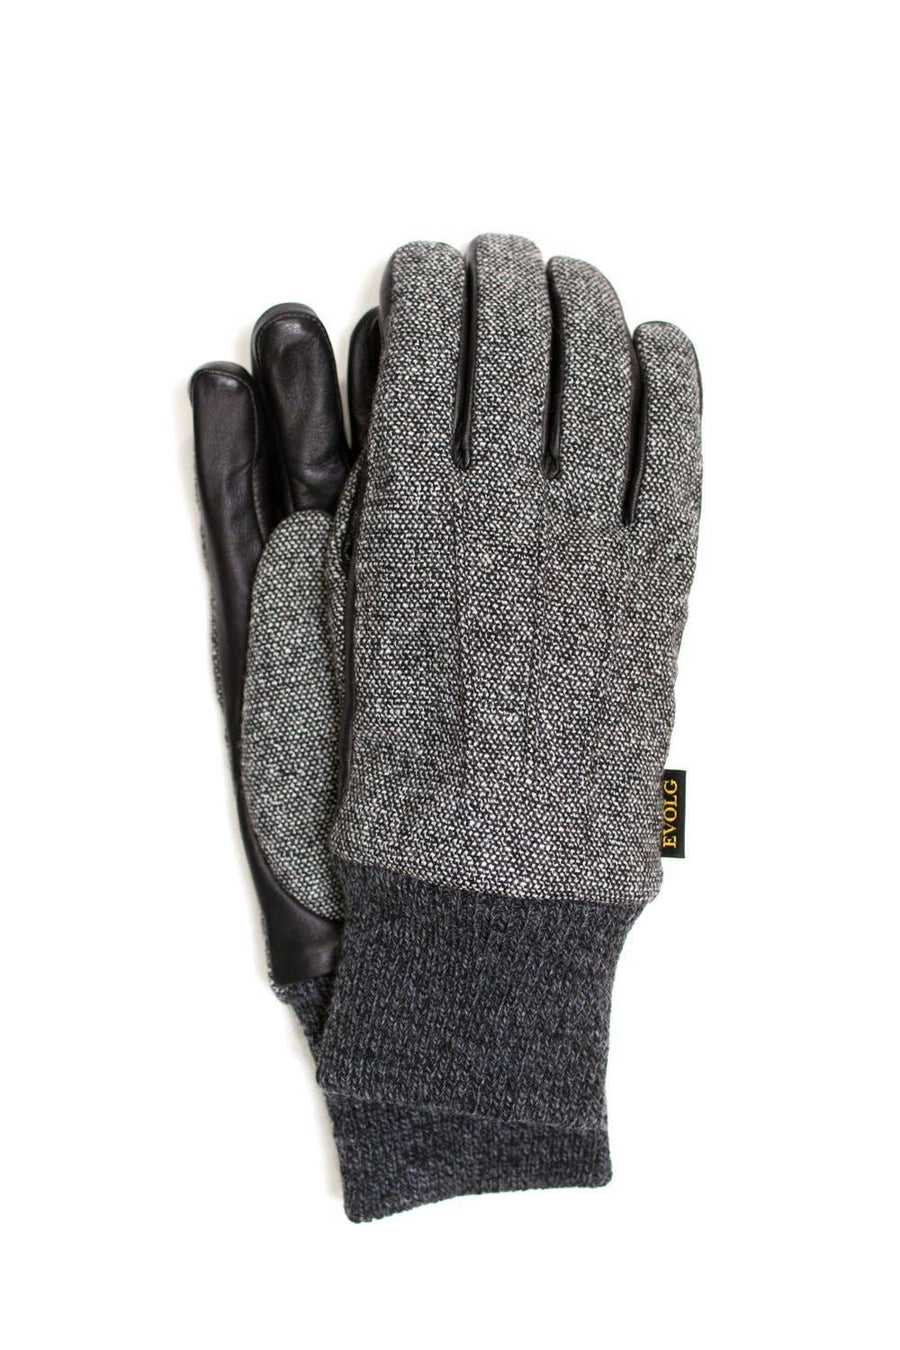 Alpaca & Leather Gloves - Men’s Leather EVOLG